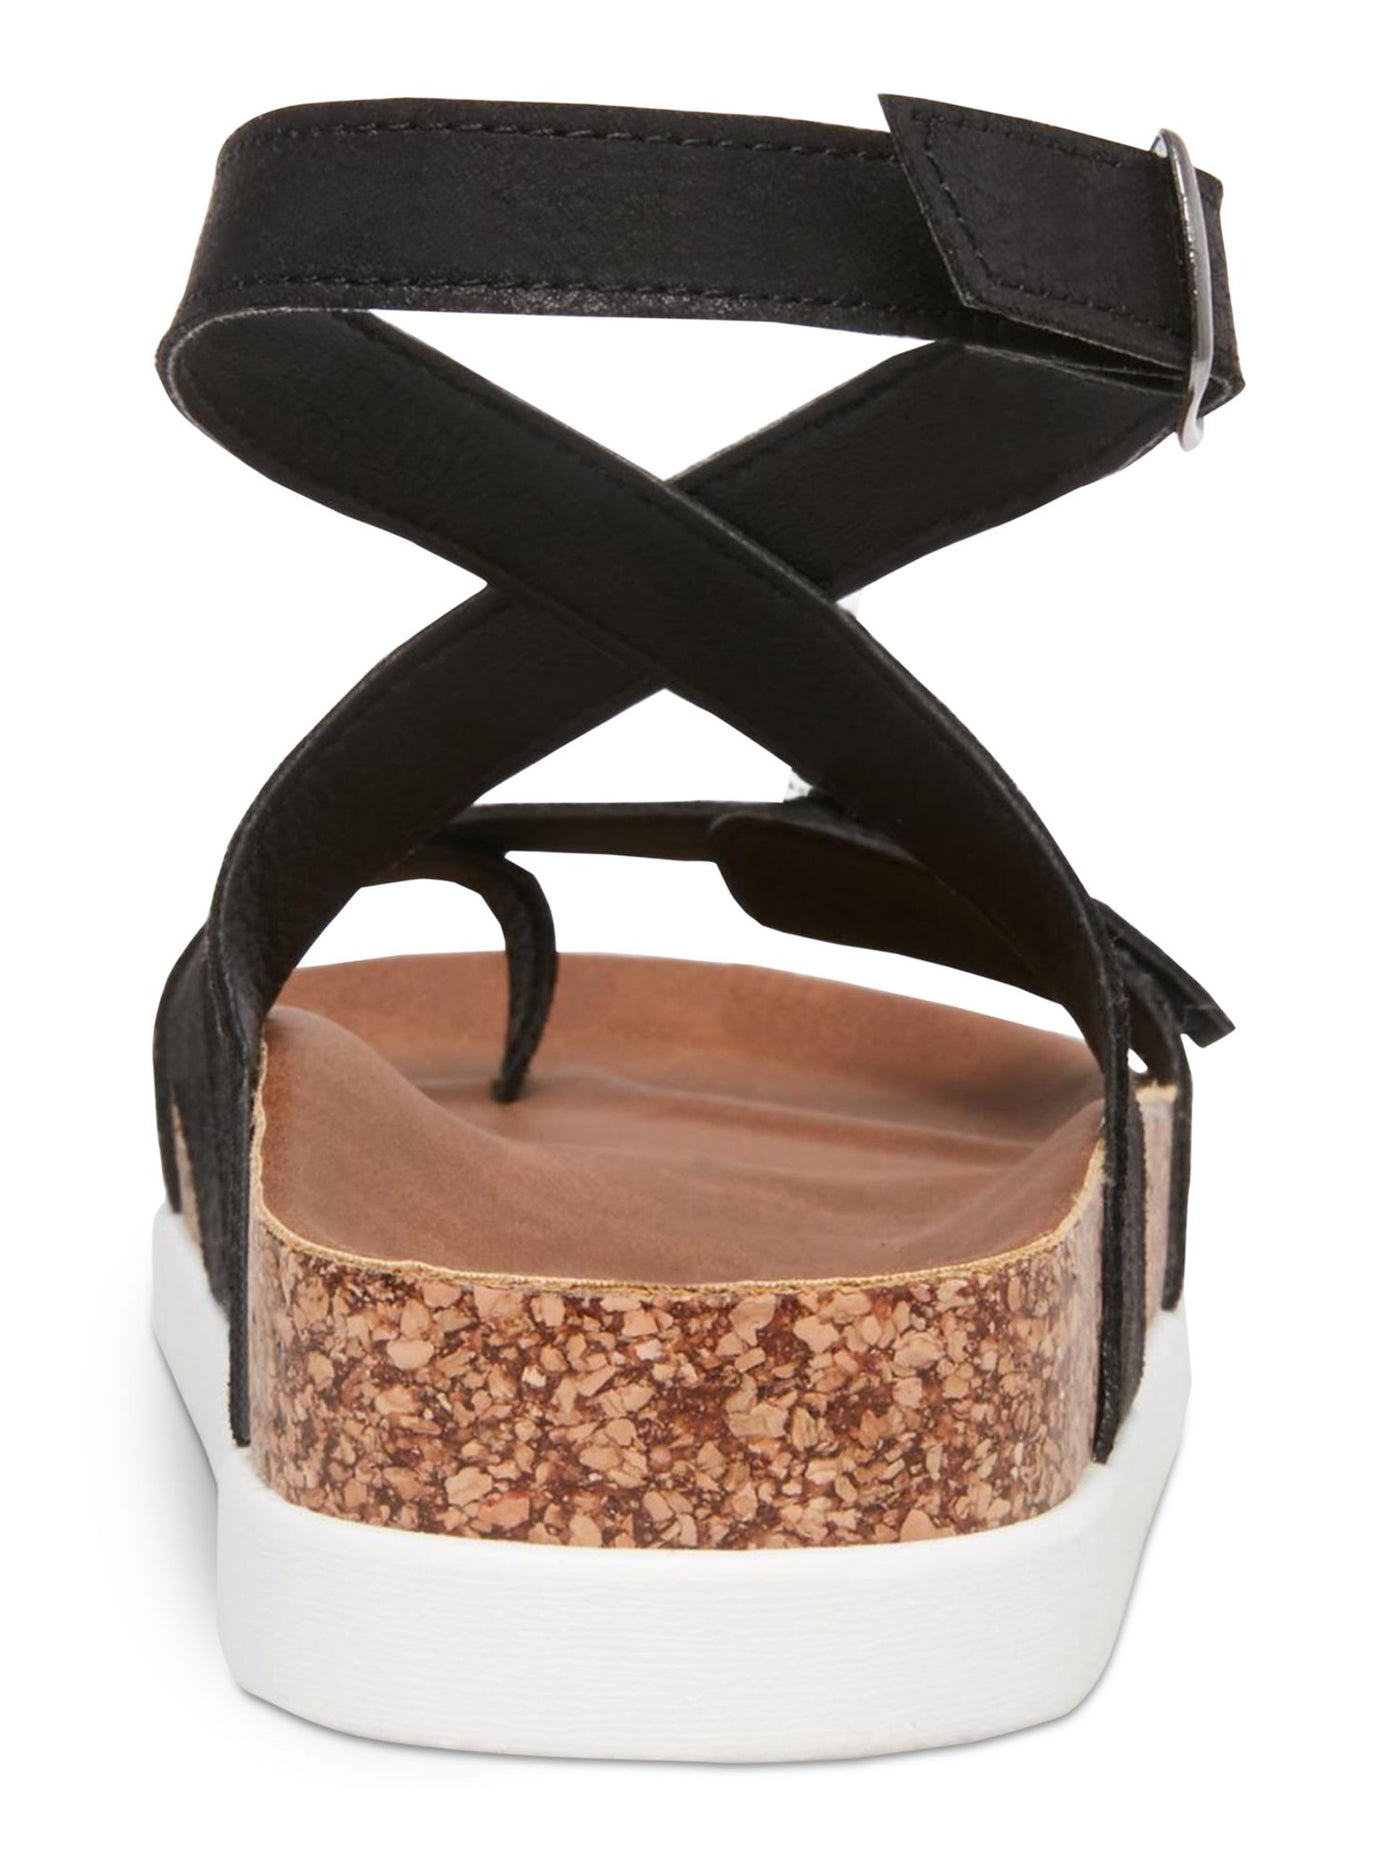 MADDEN GIRL Womens Black 1" Platform Treaded Strappy Adjustable Garnett Round Toe Wedge Buckle Thong Sandals Shoes 7.5 M